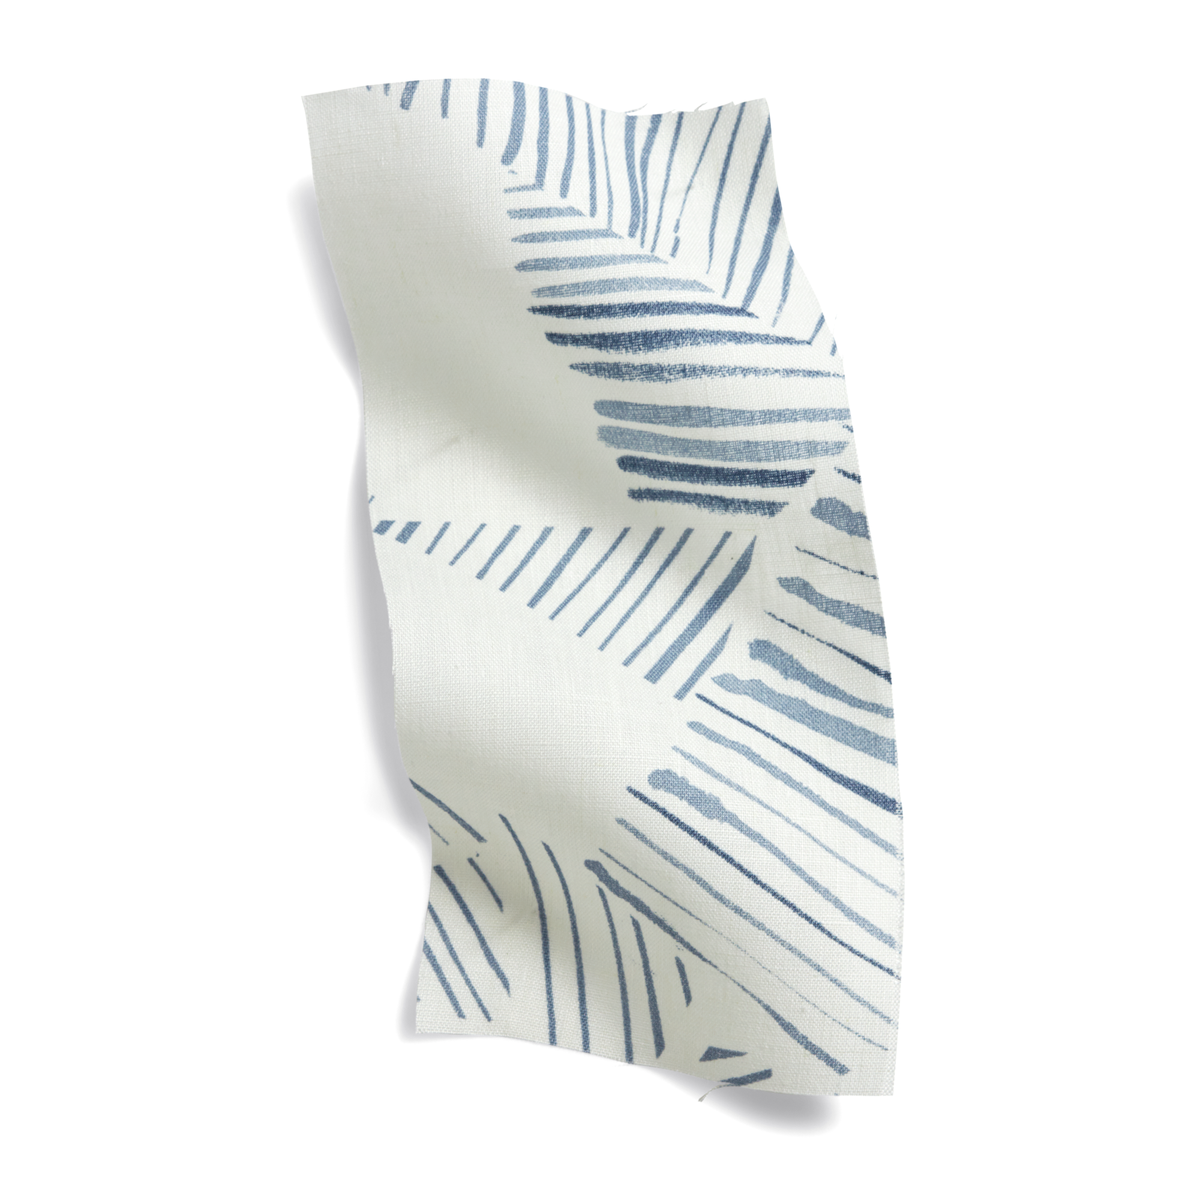 Mixed Stripe Fabric in Blue-Slate